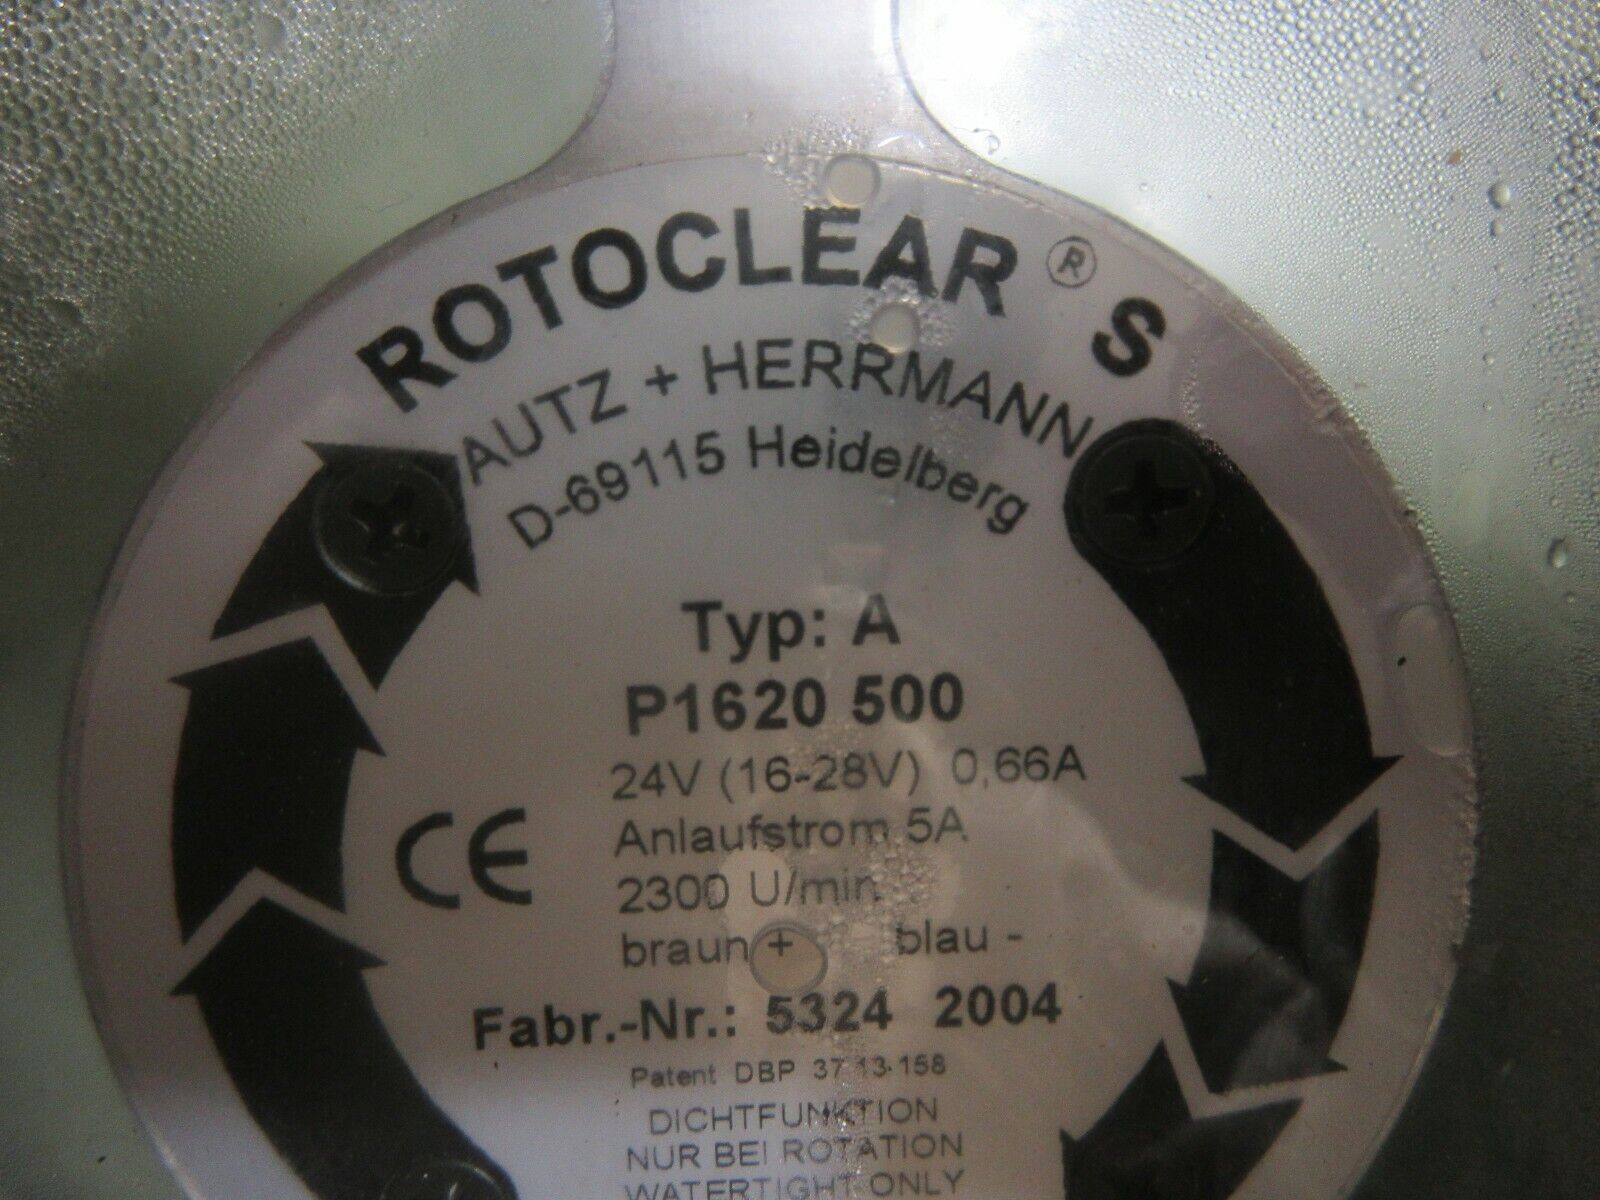 AUTZ+HERRMANN ROTOCLEAR S TYP: A P1620 500 FABR. -NR.: 5324 2004 DMG MAHO DMC70V